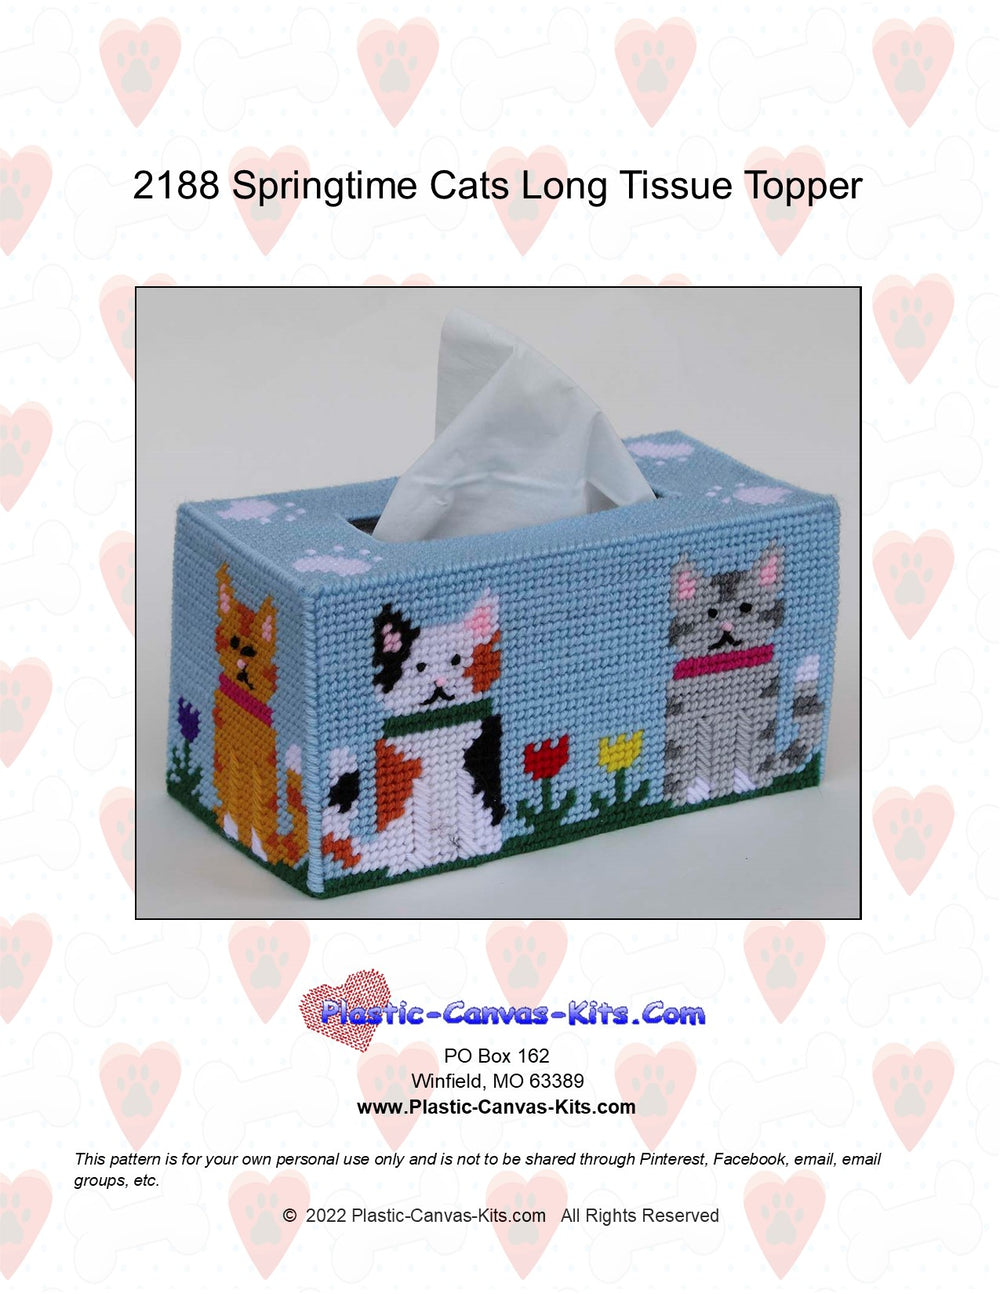 Springtime Cats Long Tissue Topper